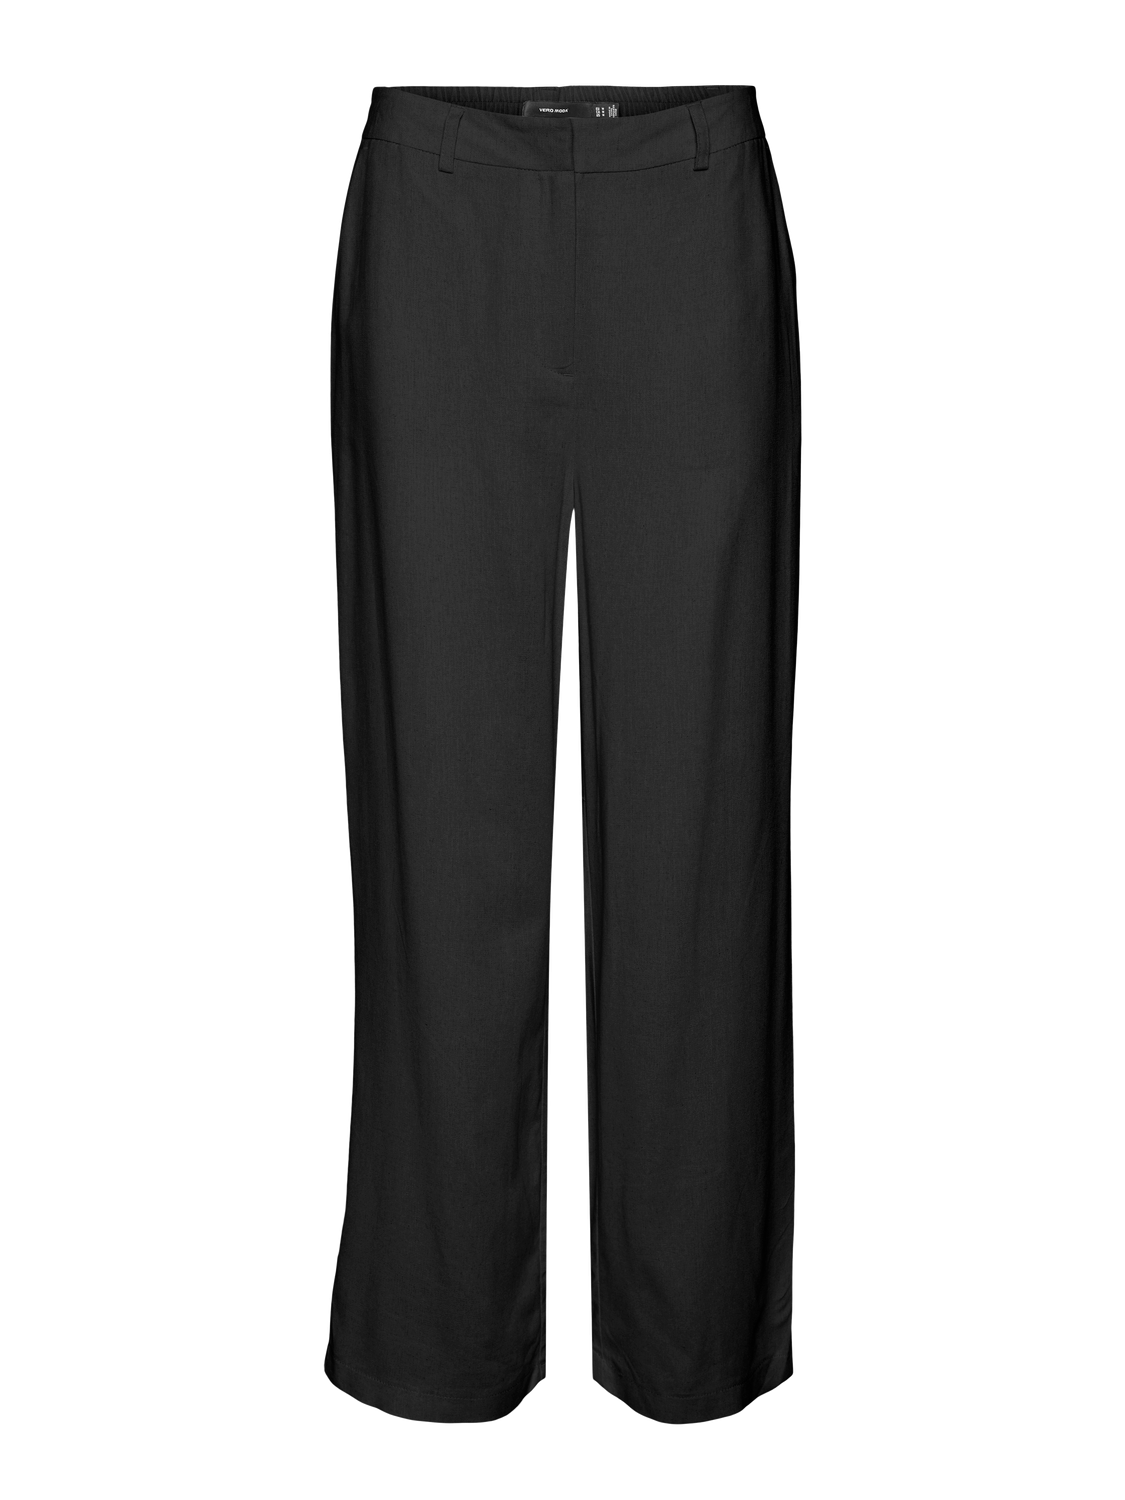 Vero Moda VMDINNA High waist Trousers -Black - 10313928